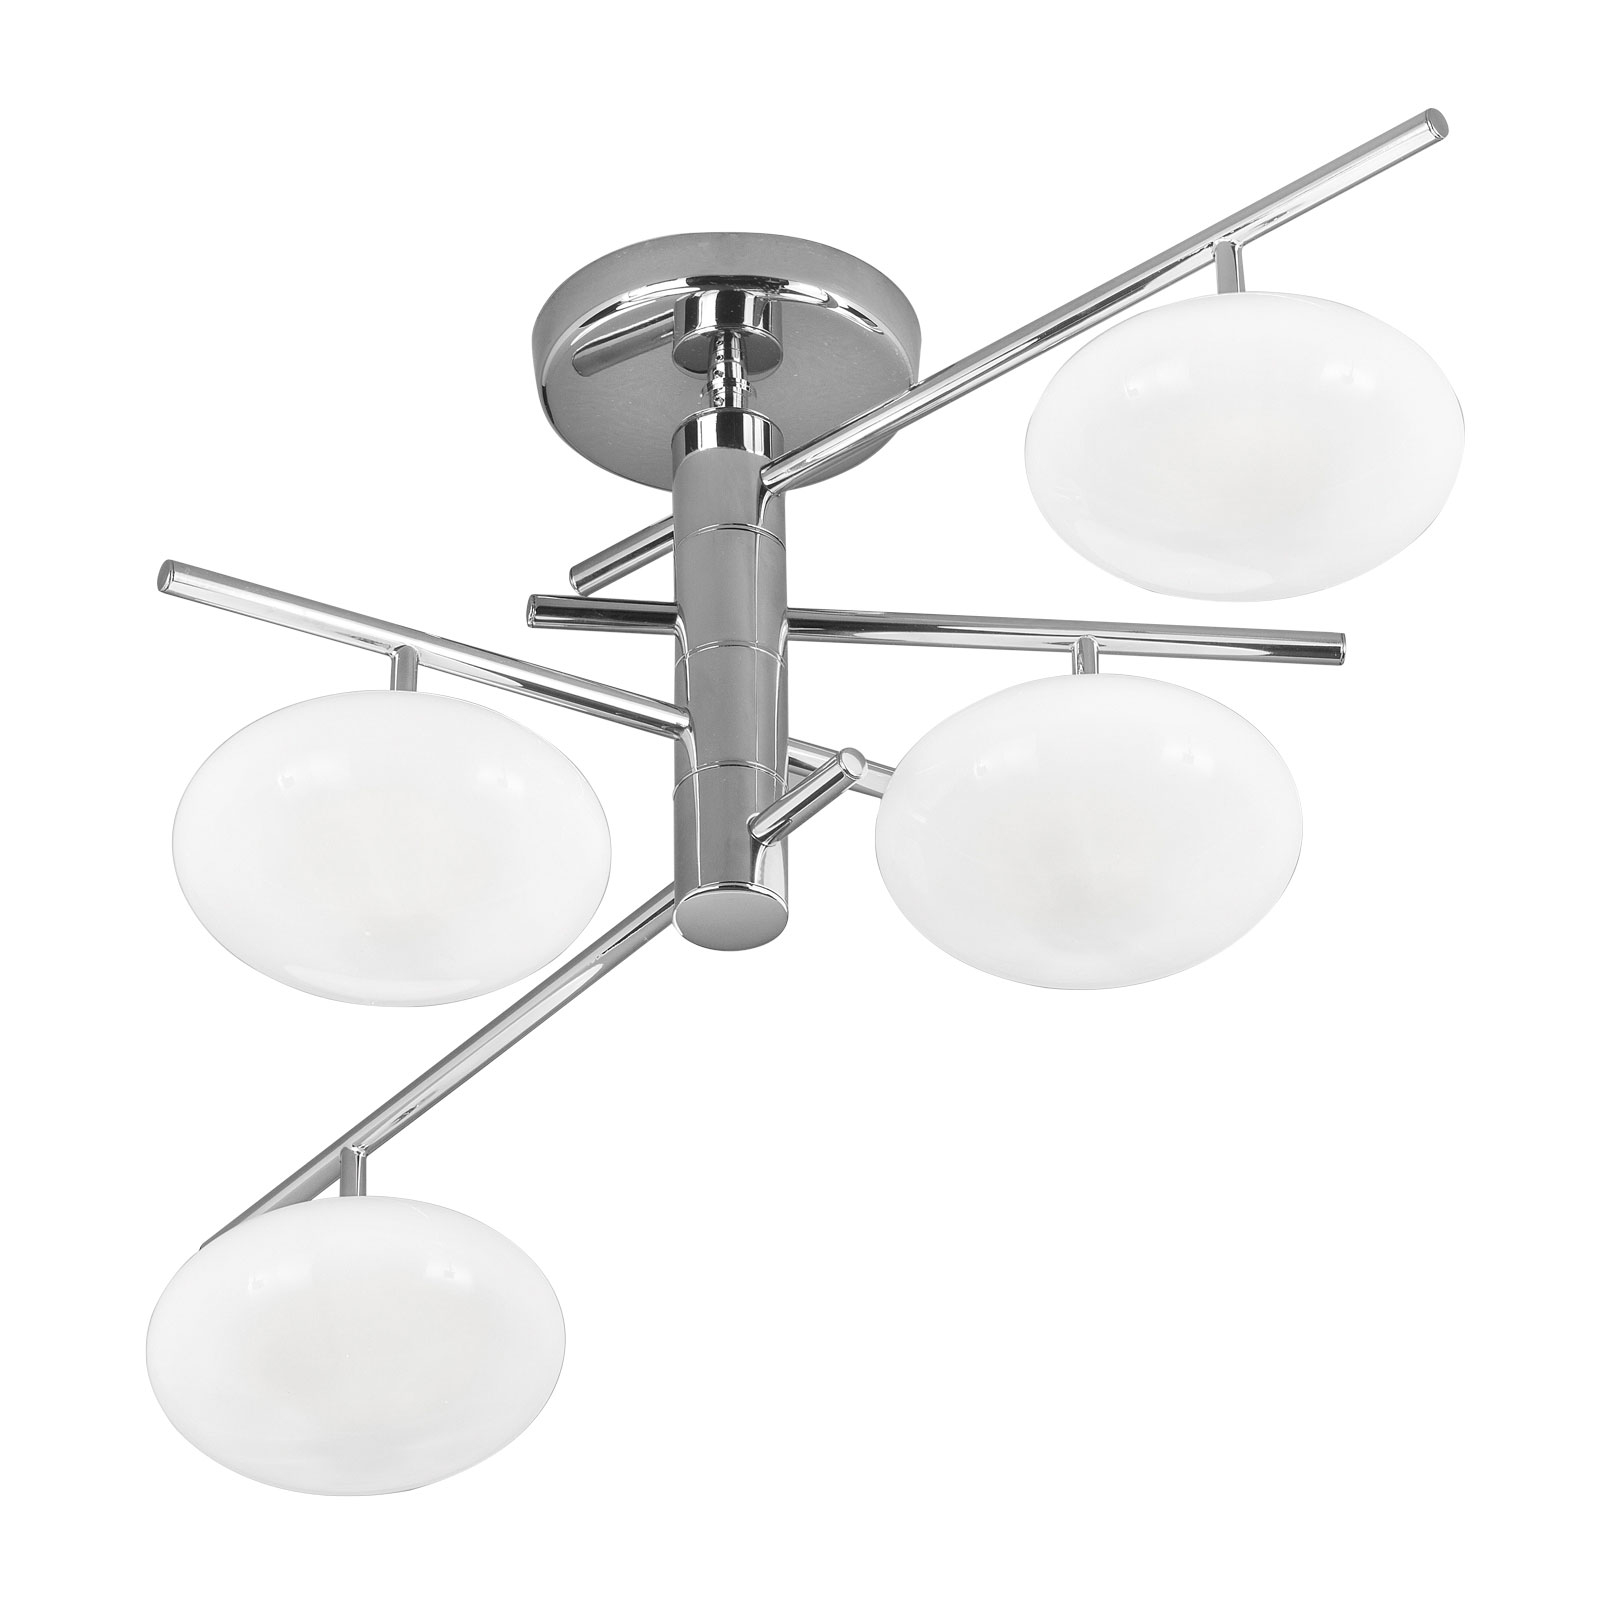 Dolce ceiling light 4-bulb chrome/white lampshades